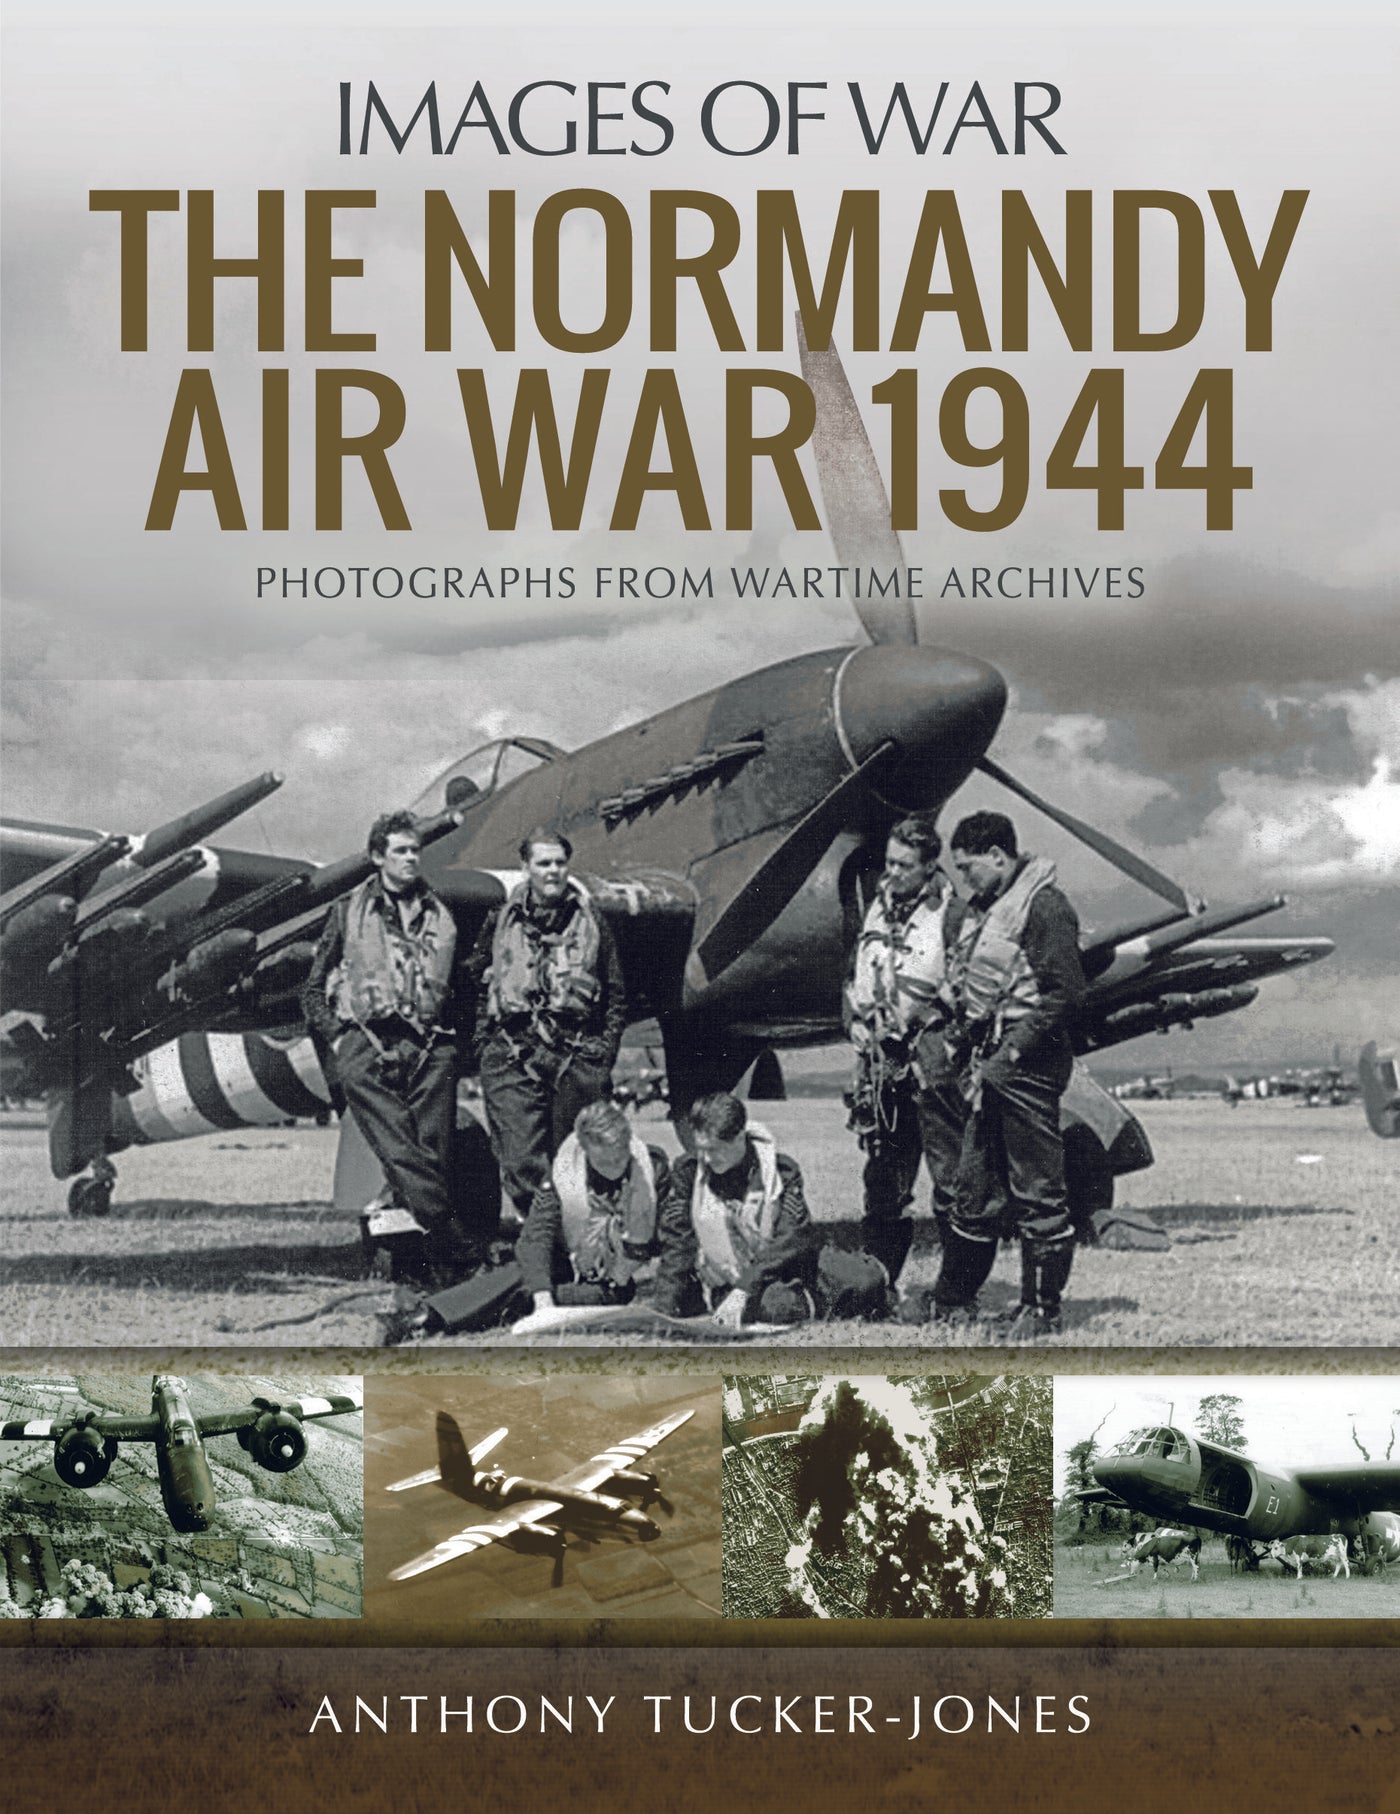 The Normandy Air War 1944